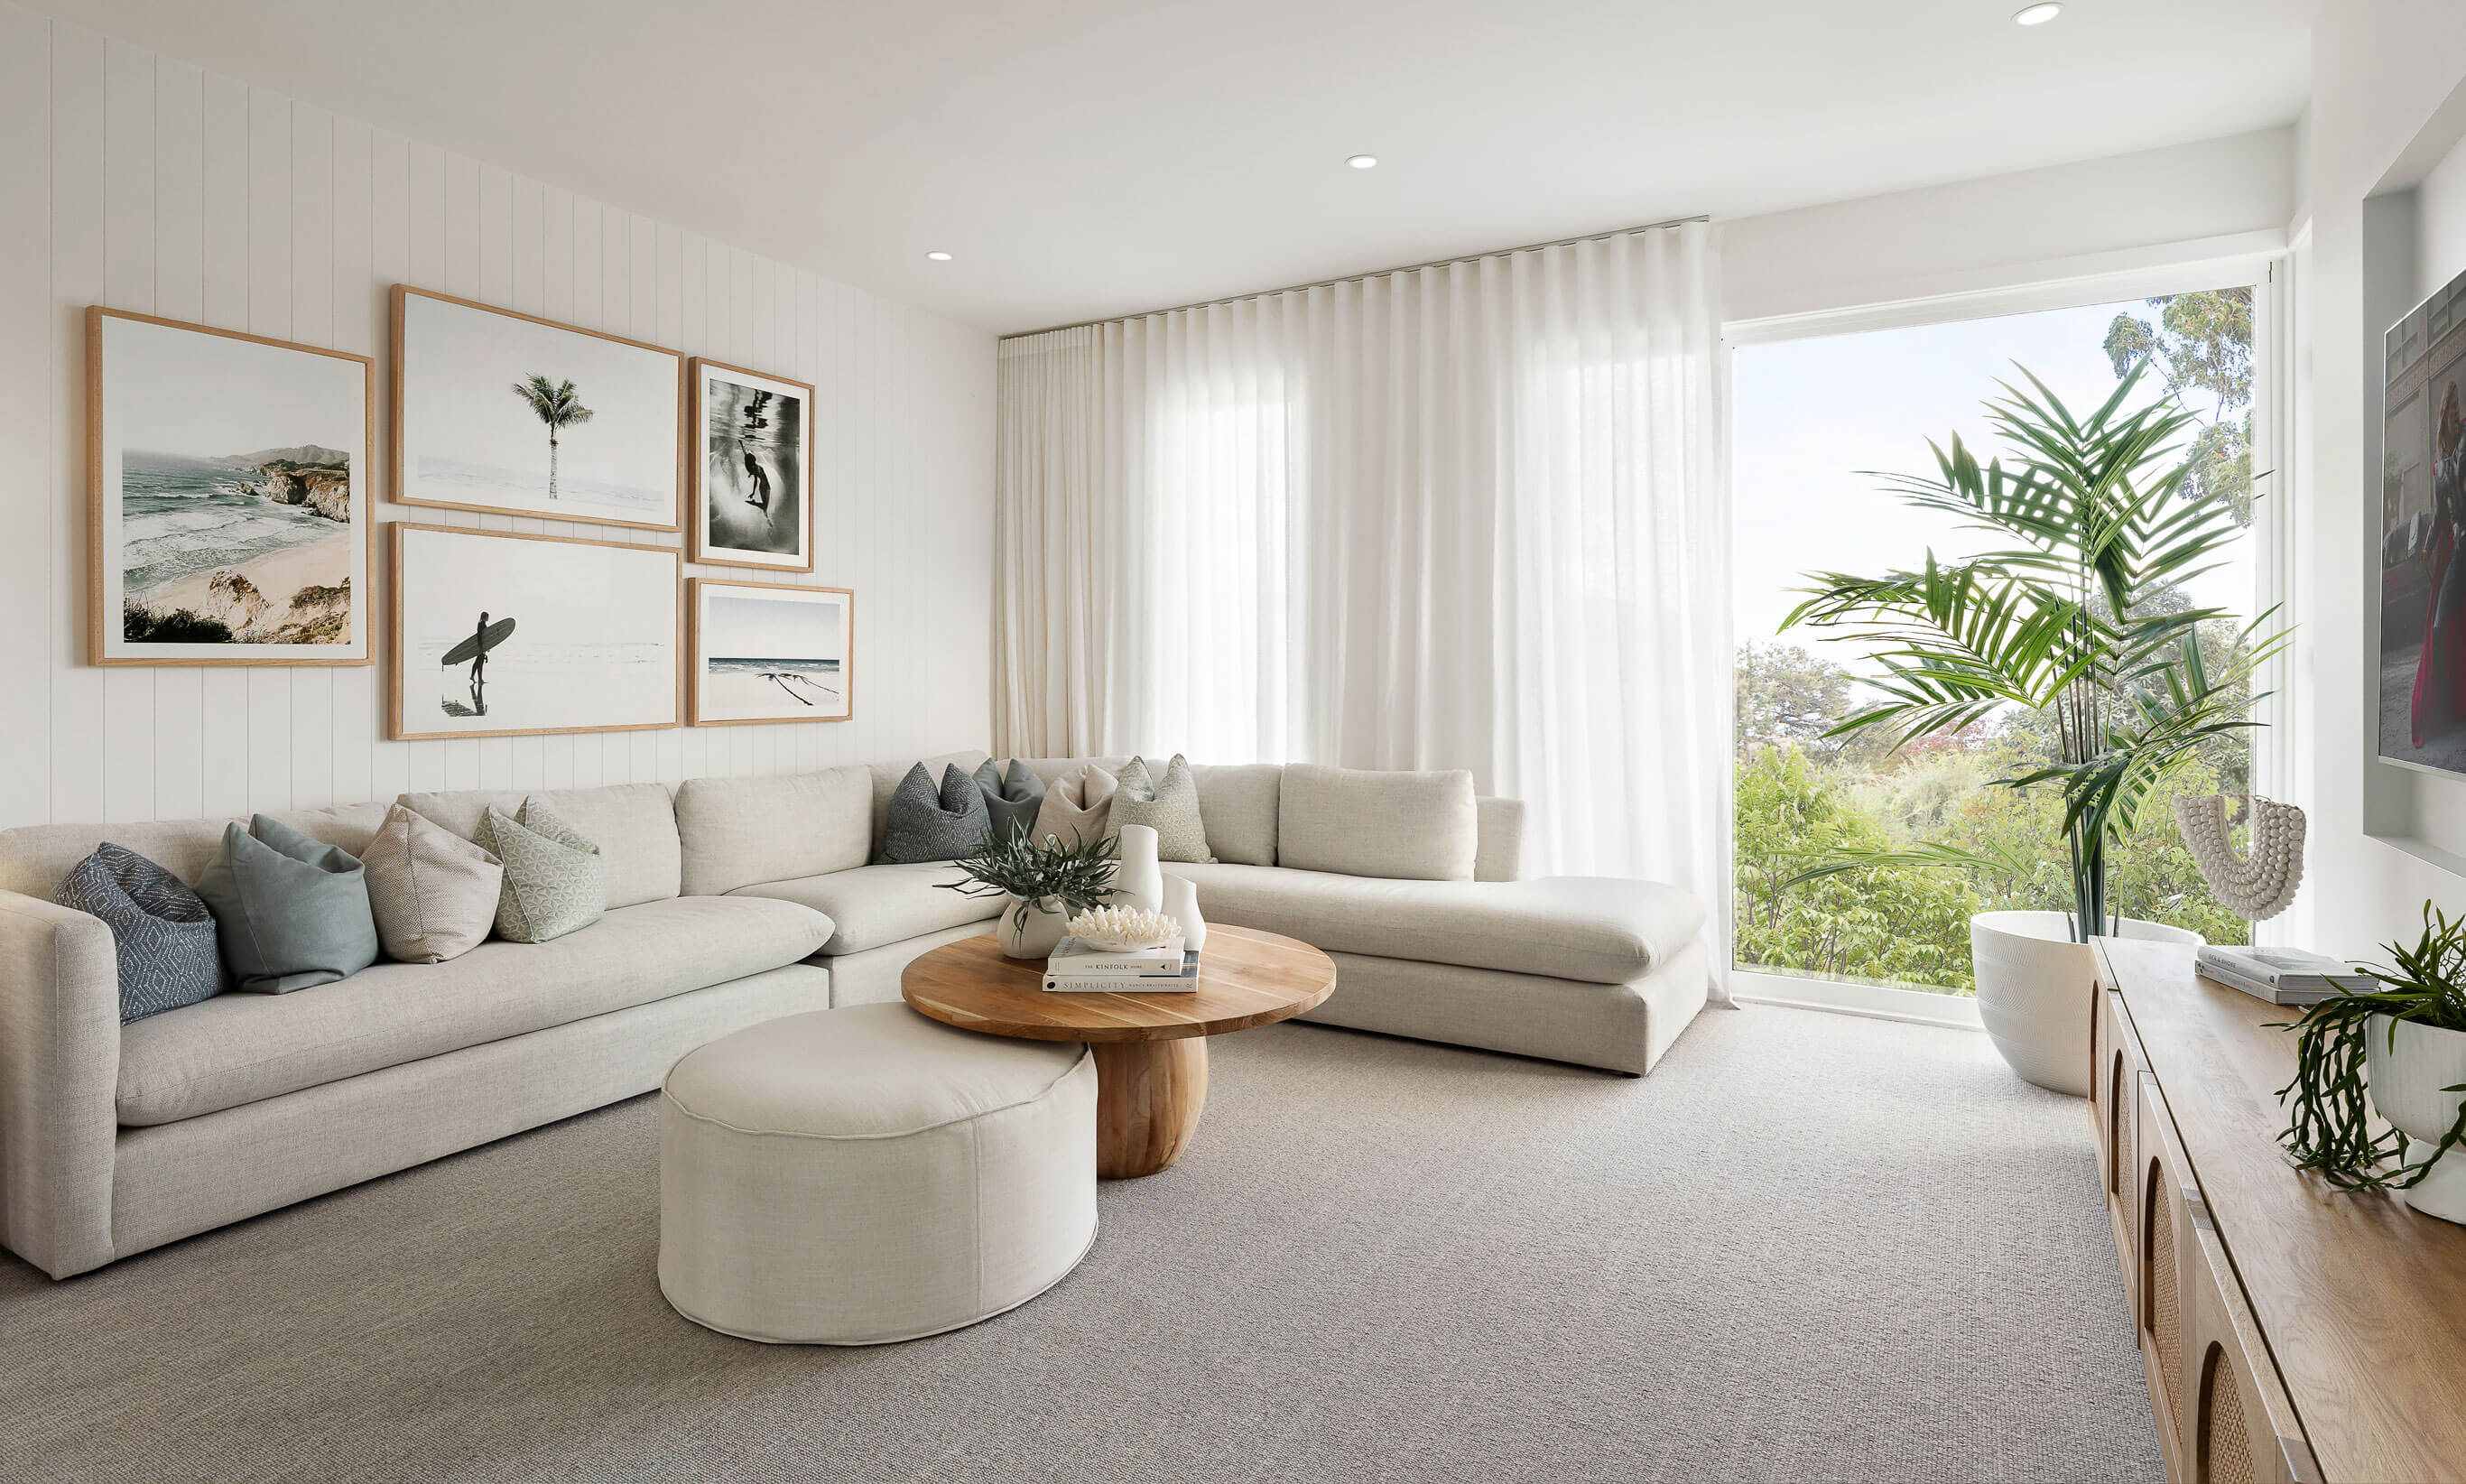 Stylish and Modern 3 Bedroom House Plans Australia